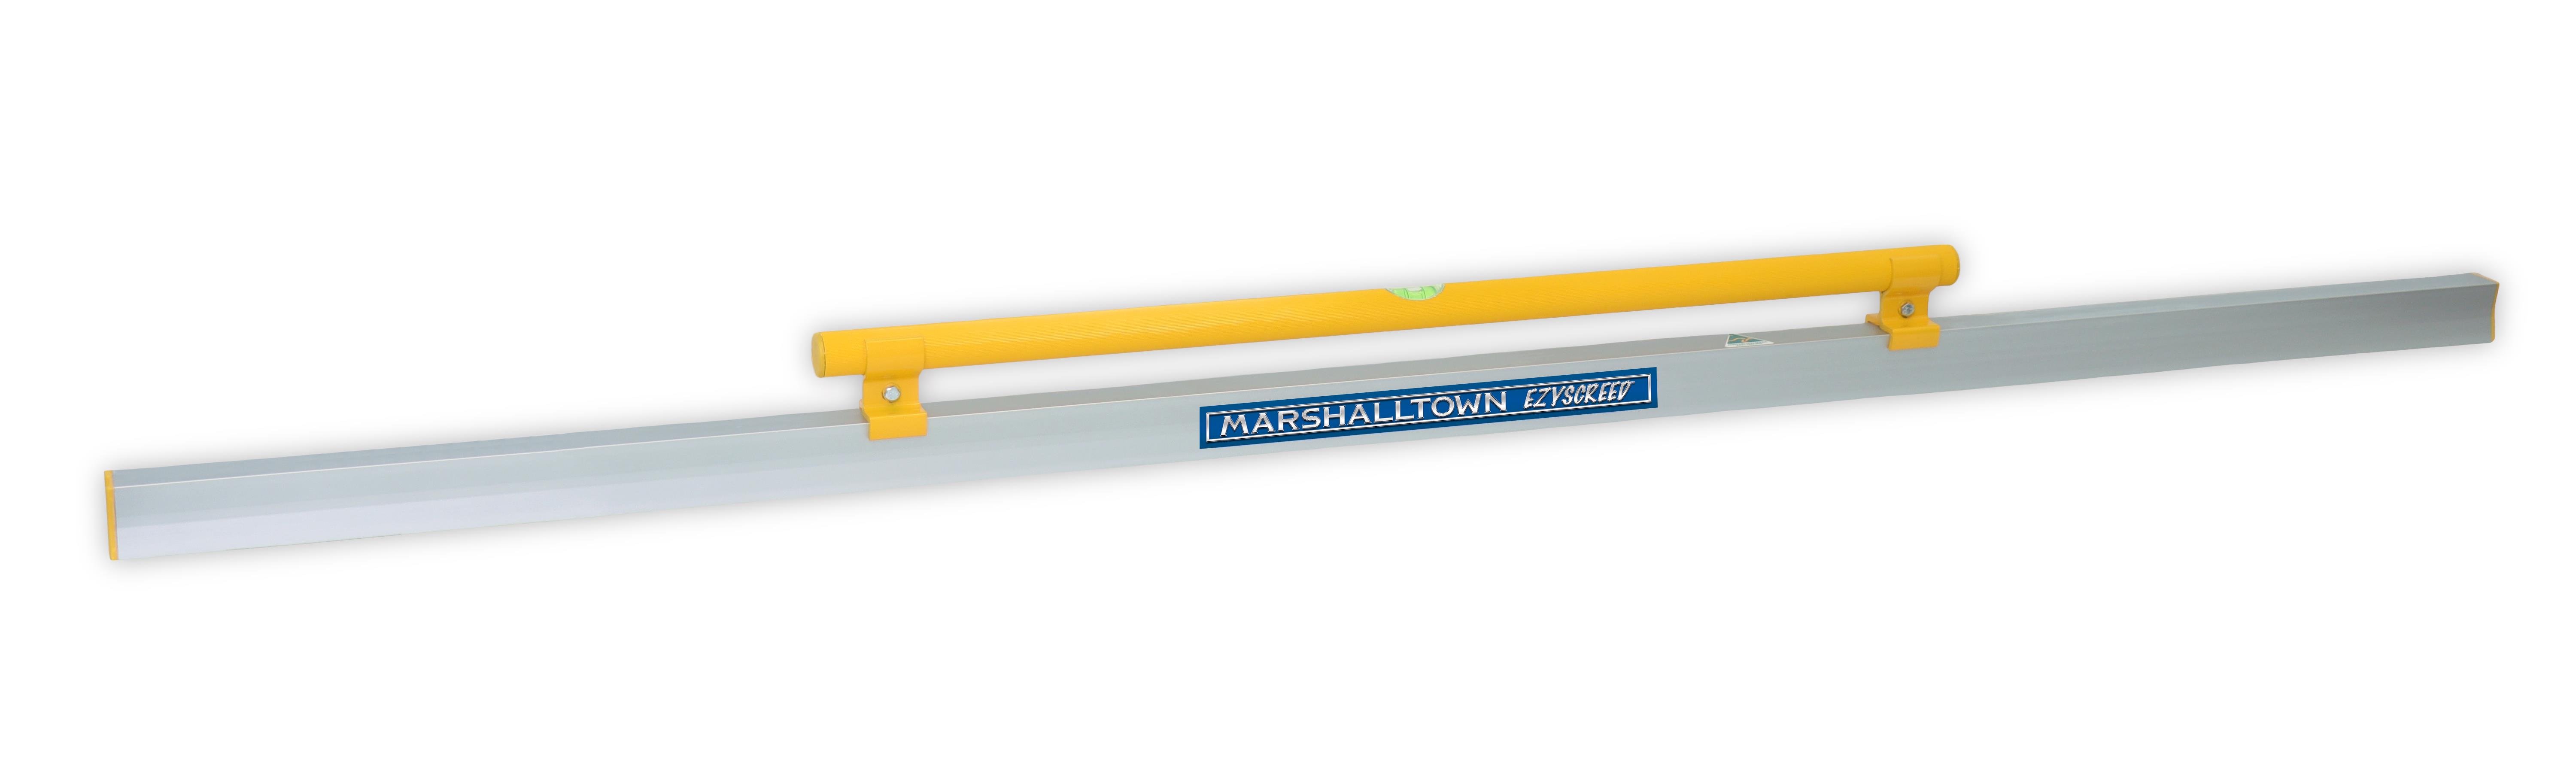 Marshalltown (28394) product